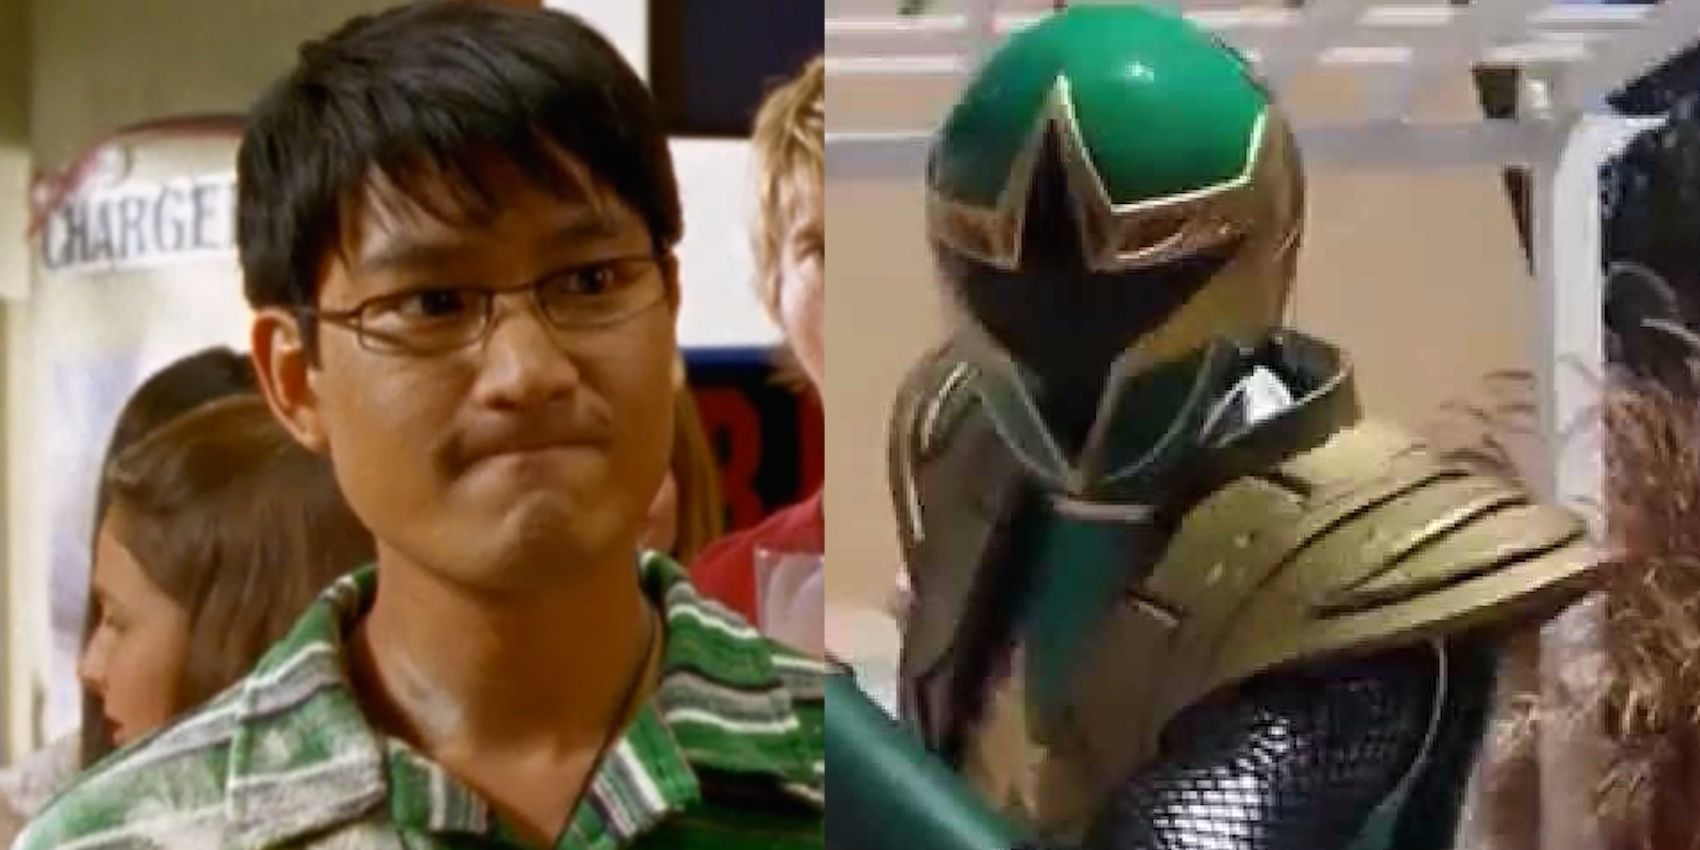 Cameron as the Green Ranger in Power Rangers Ninja Storm